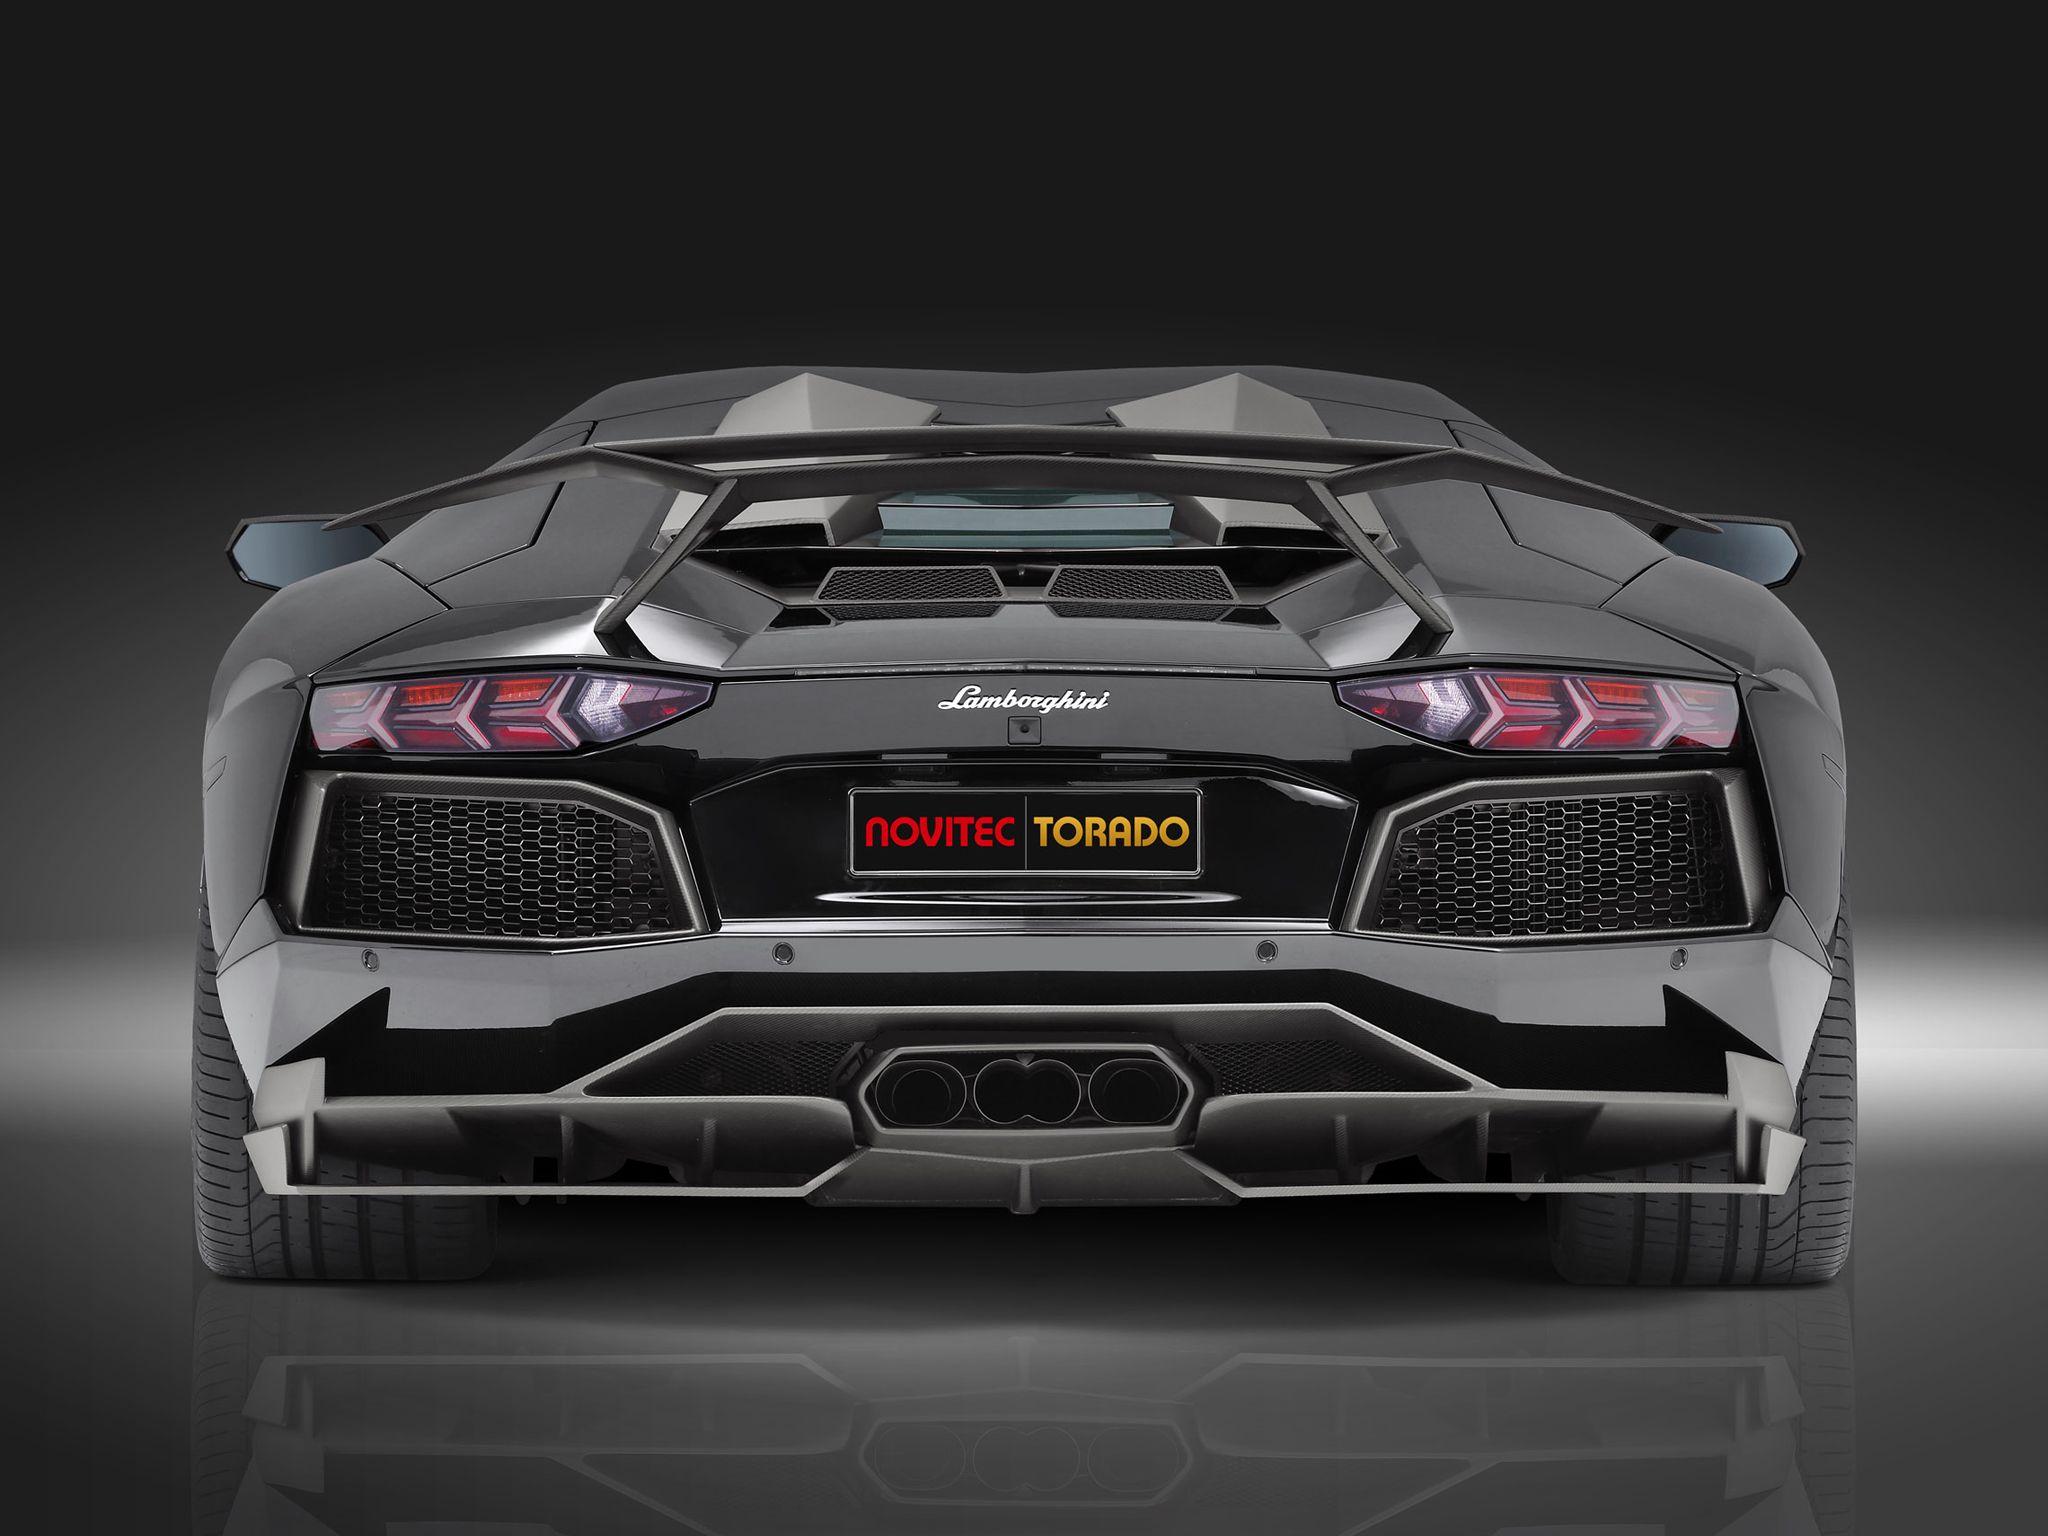 2012 Lamborghini Aventador LP700-4 by Novitec Torado